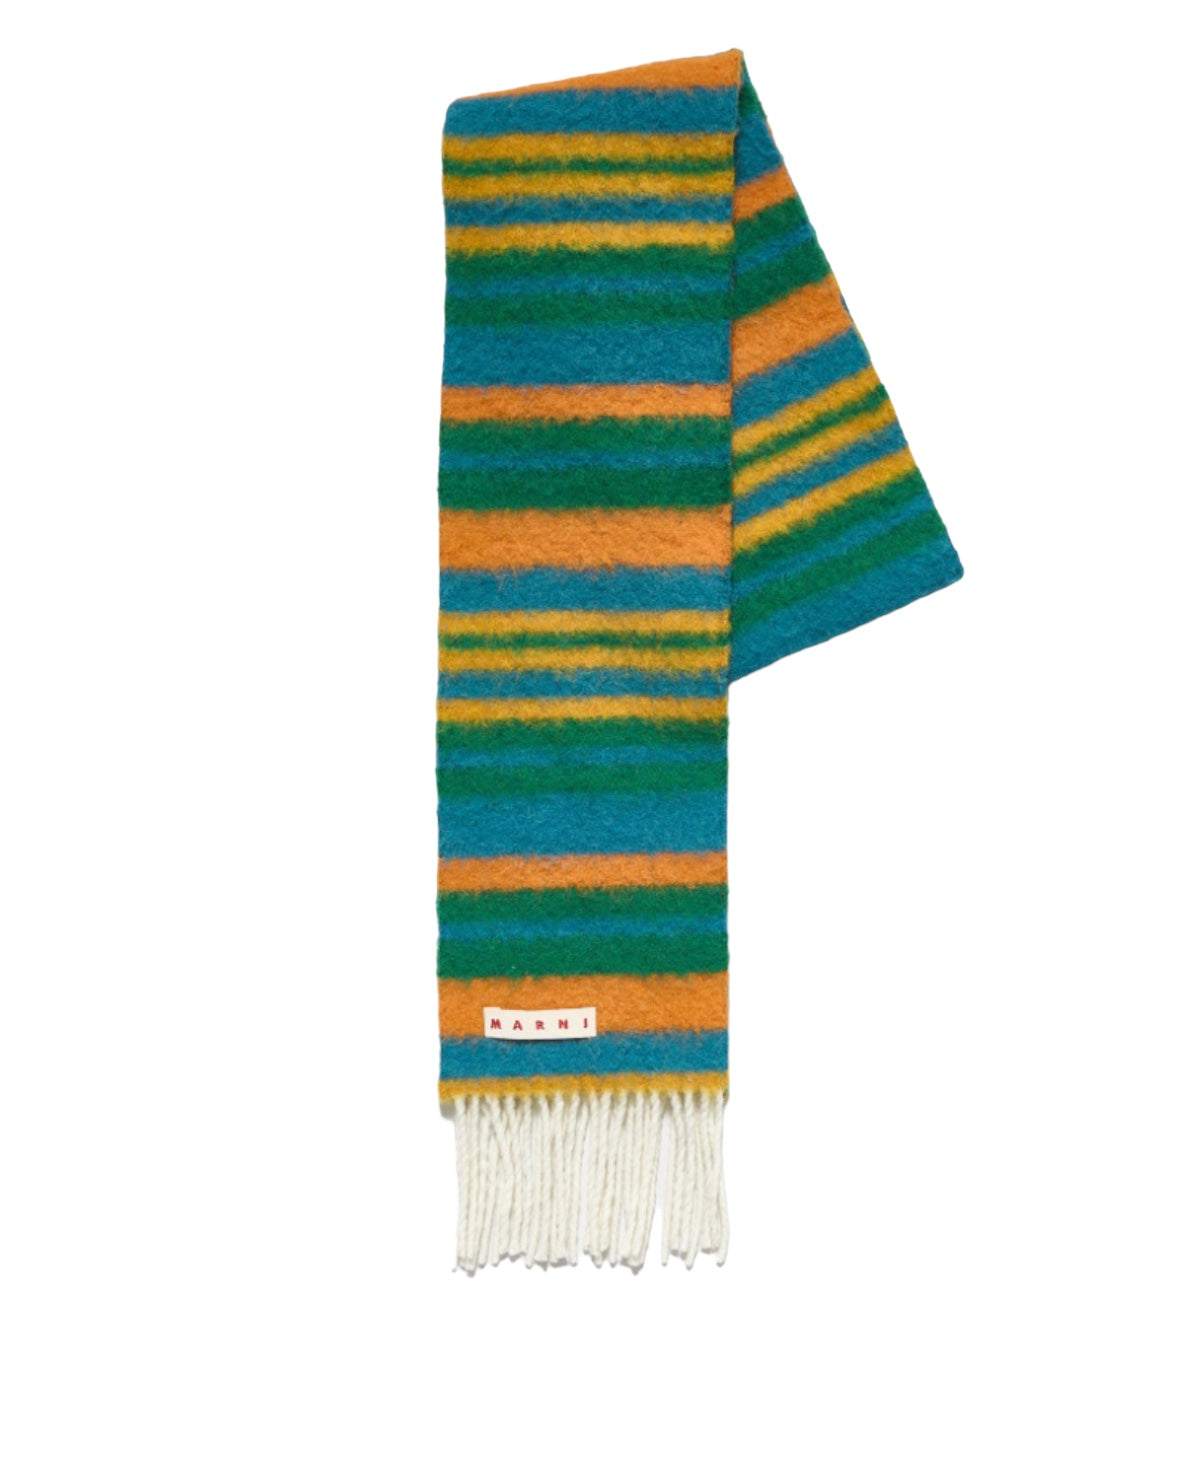 Orange and green wool scarf